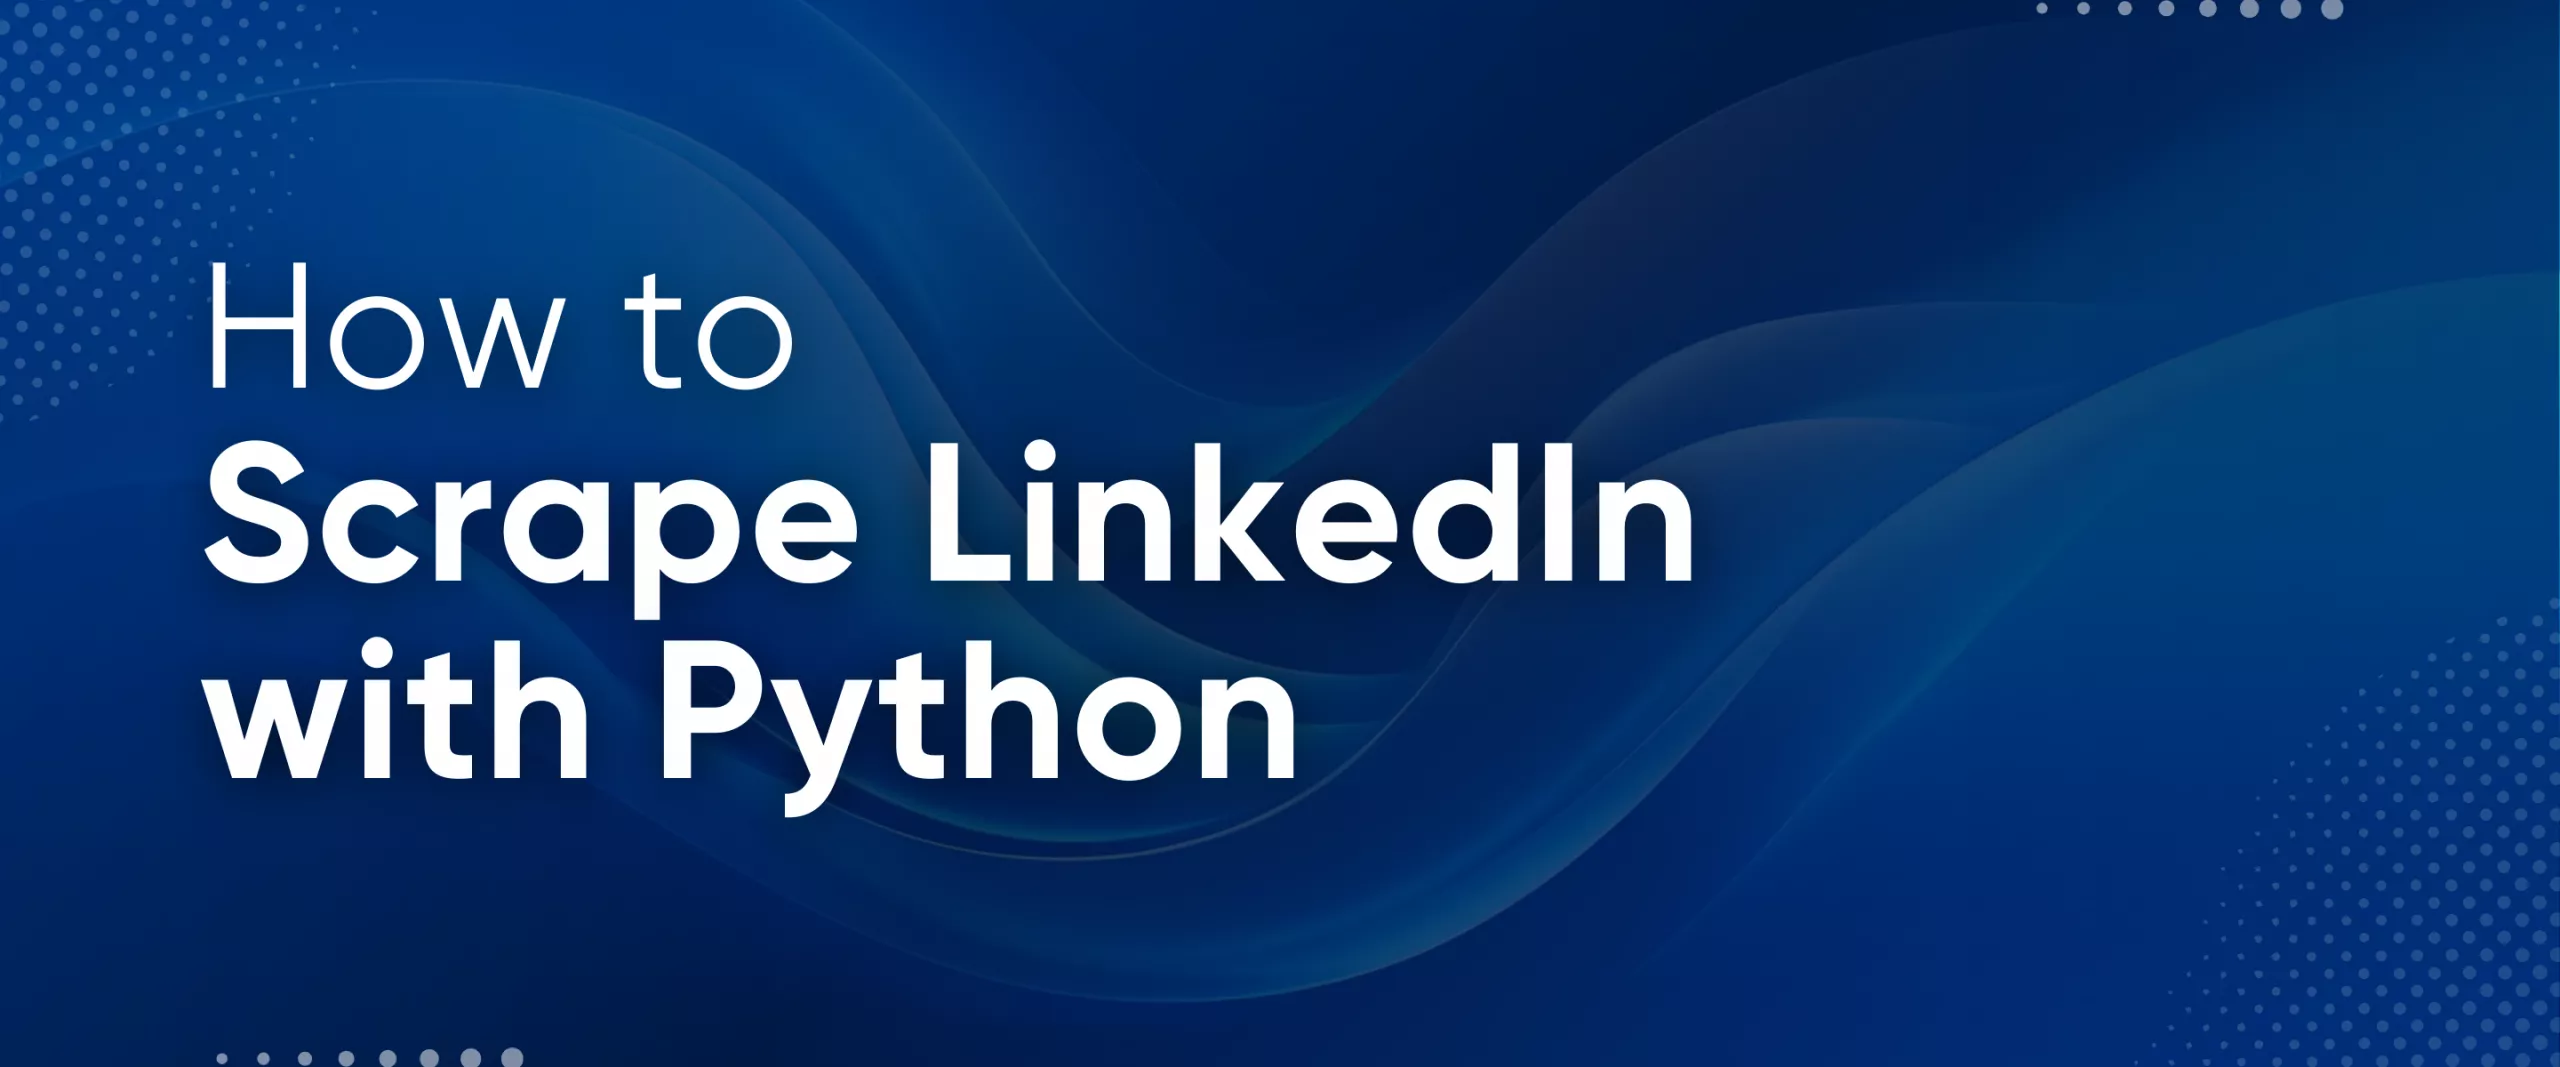 How to Scrape LinkedIn with Python